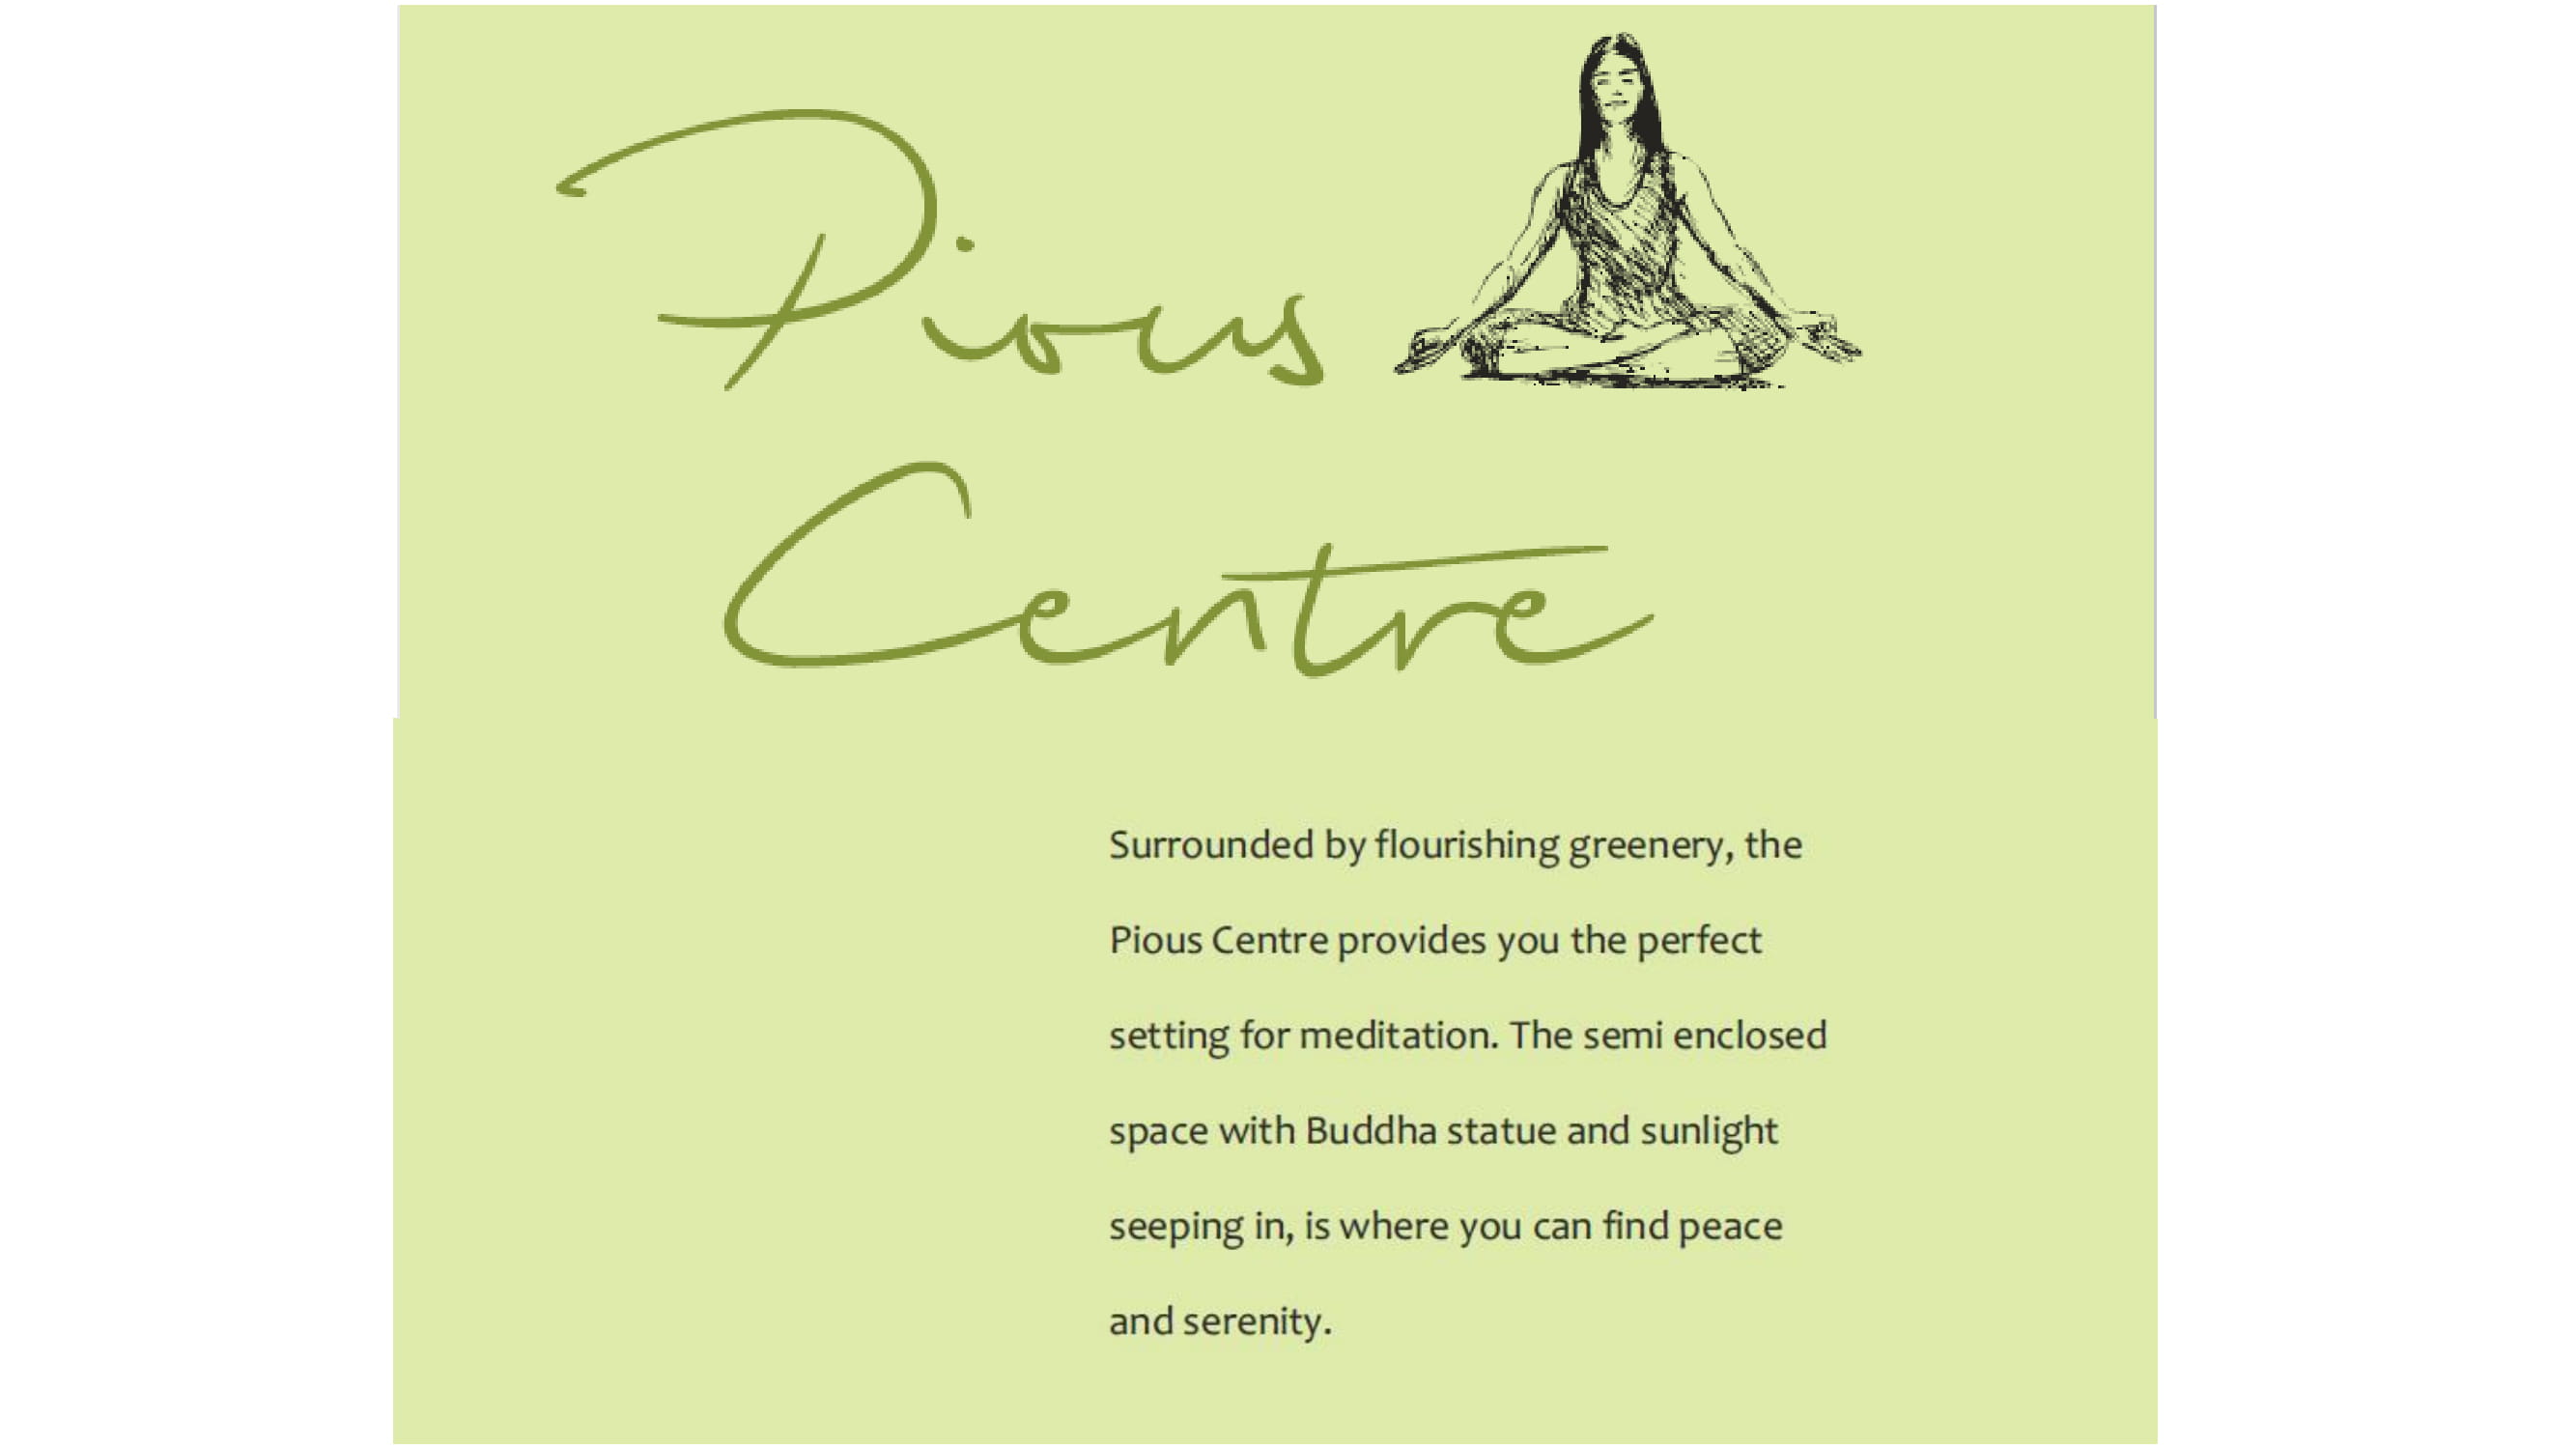 Pious Center